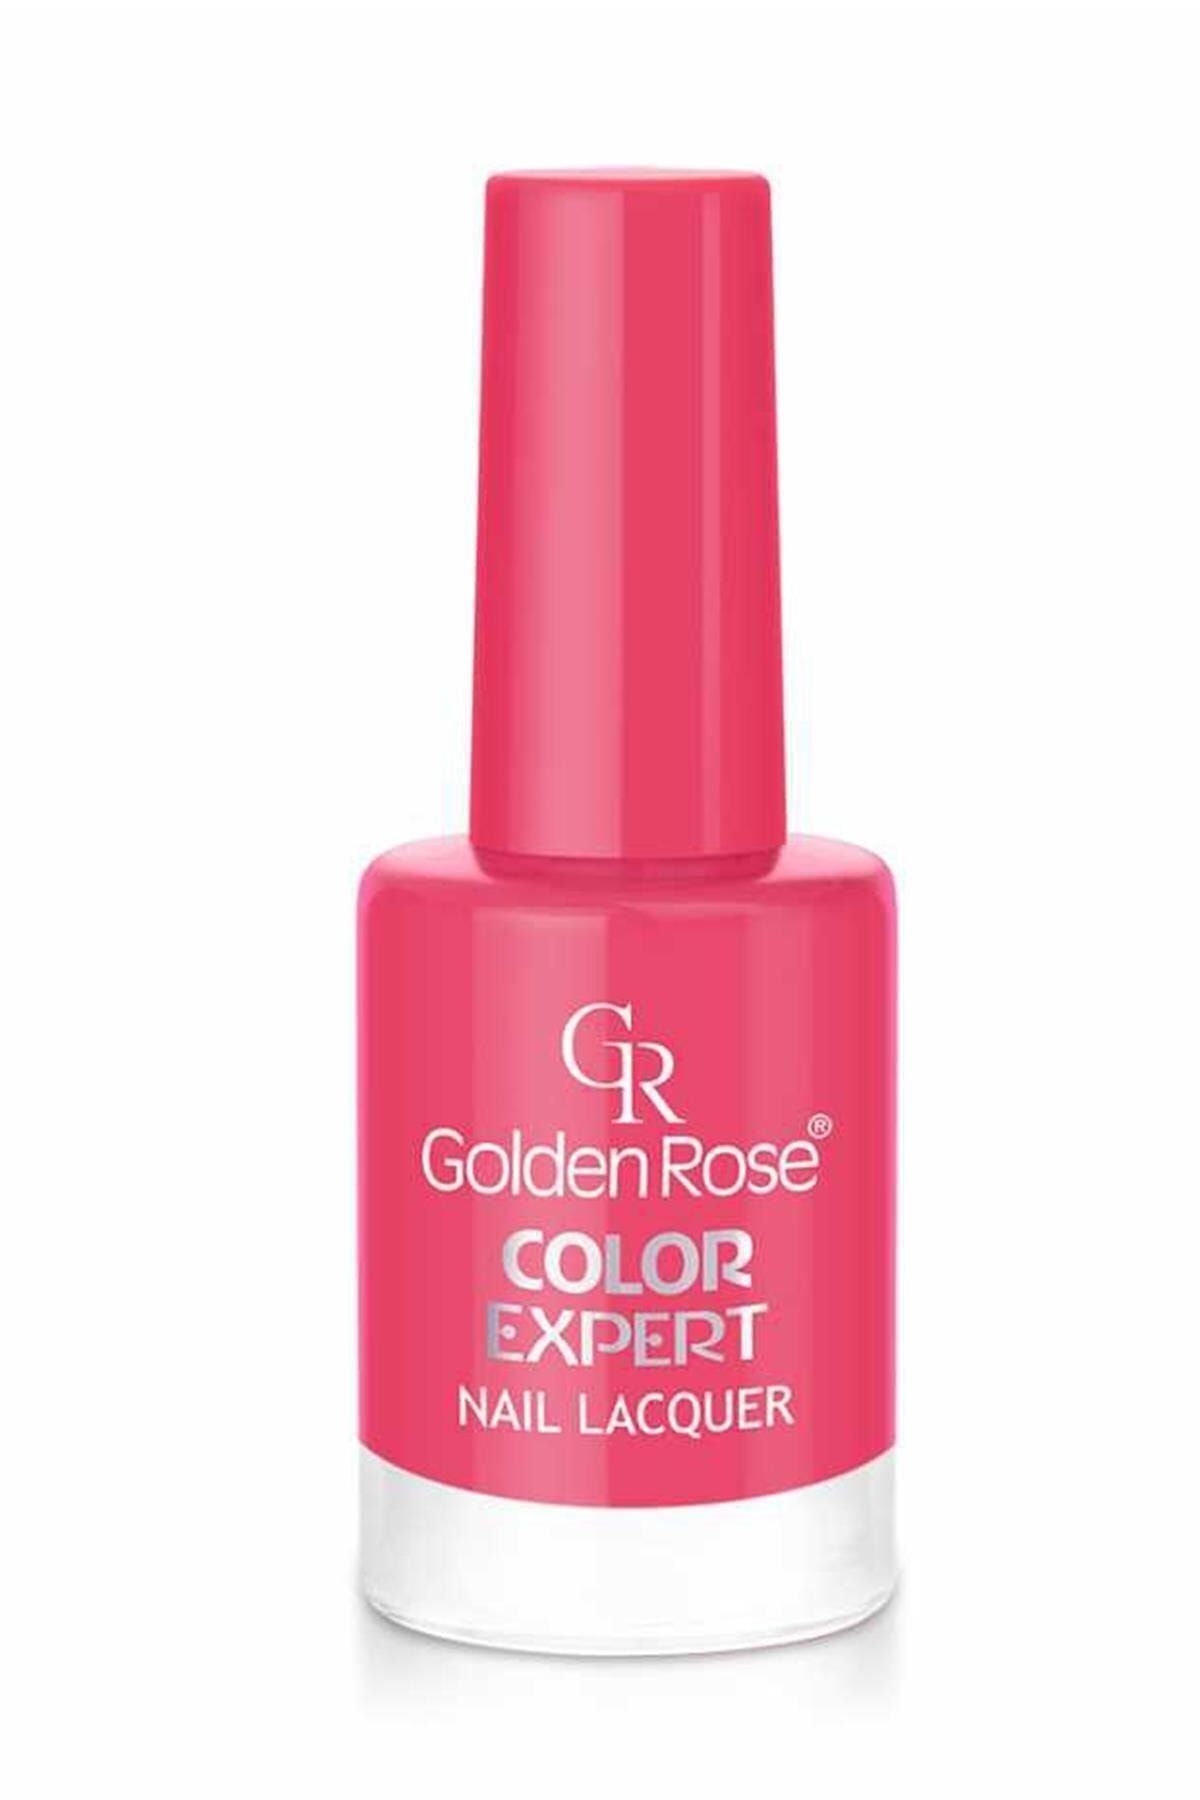 Golden Rose Oje - Color Expert Nail Lacquer No: 15 8691190703158